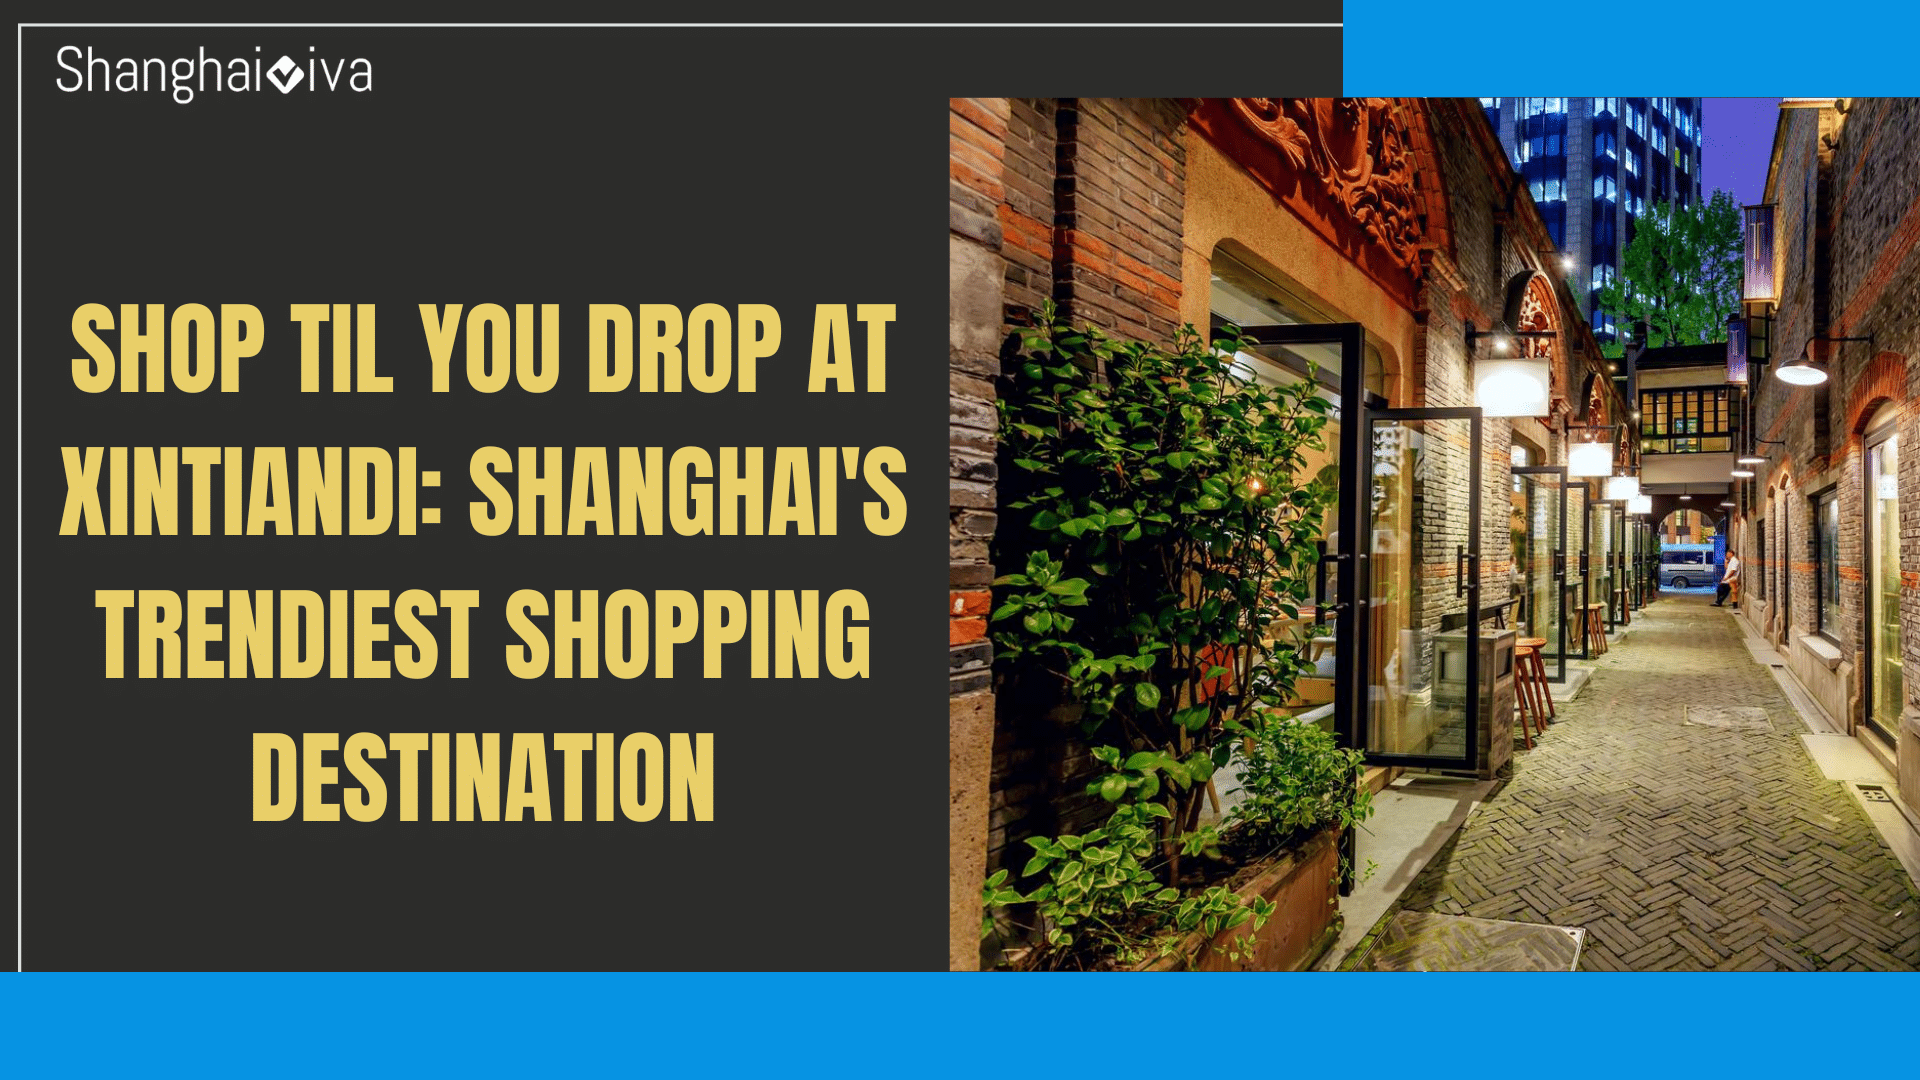 Shop til You Drop at Xintiandi: Shanghai’s Trendiest Shopping Destination